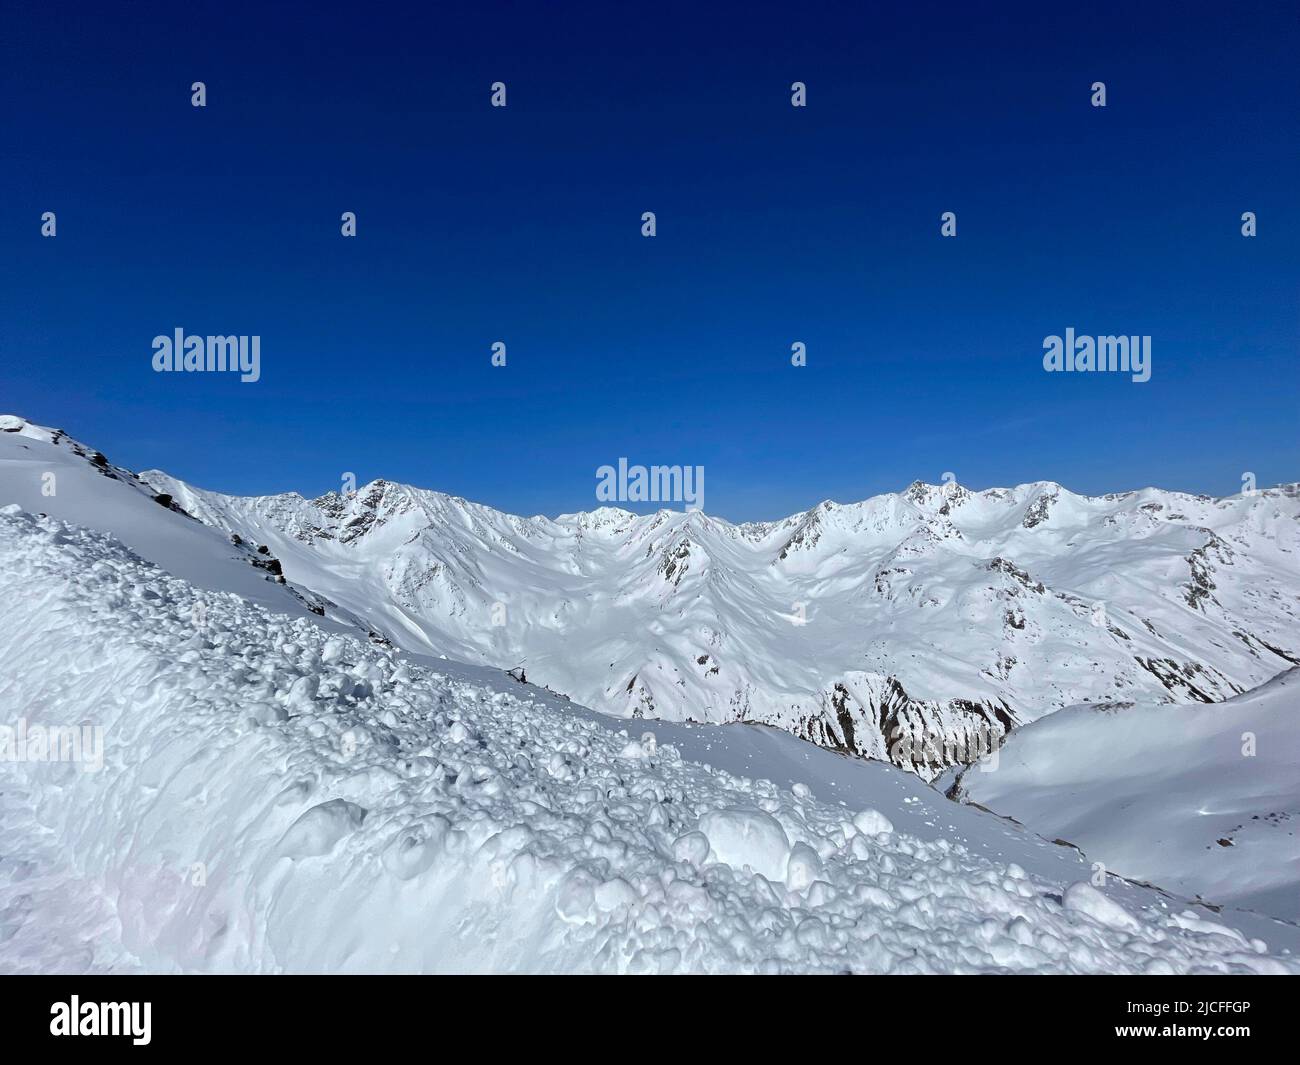 Ski resort Kappl, Paznauntal, spring, winter, mountains, nature, blue sky, mountain panorama, Diasbahn, Galtür, Ischgl, Kappl, Tyrol, Austria Stock Photo